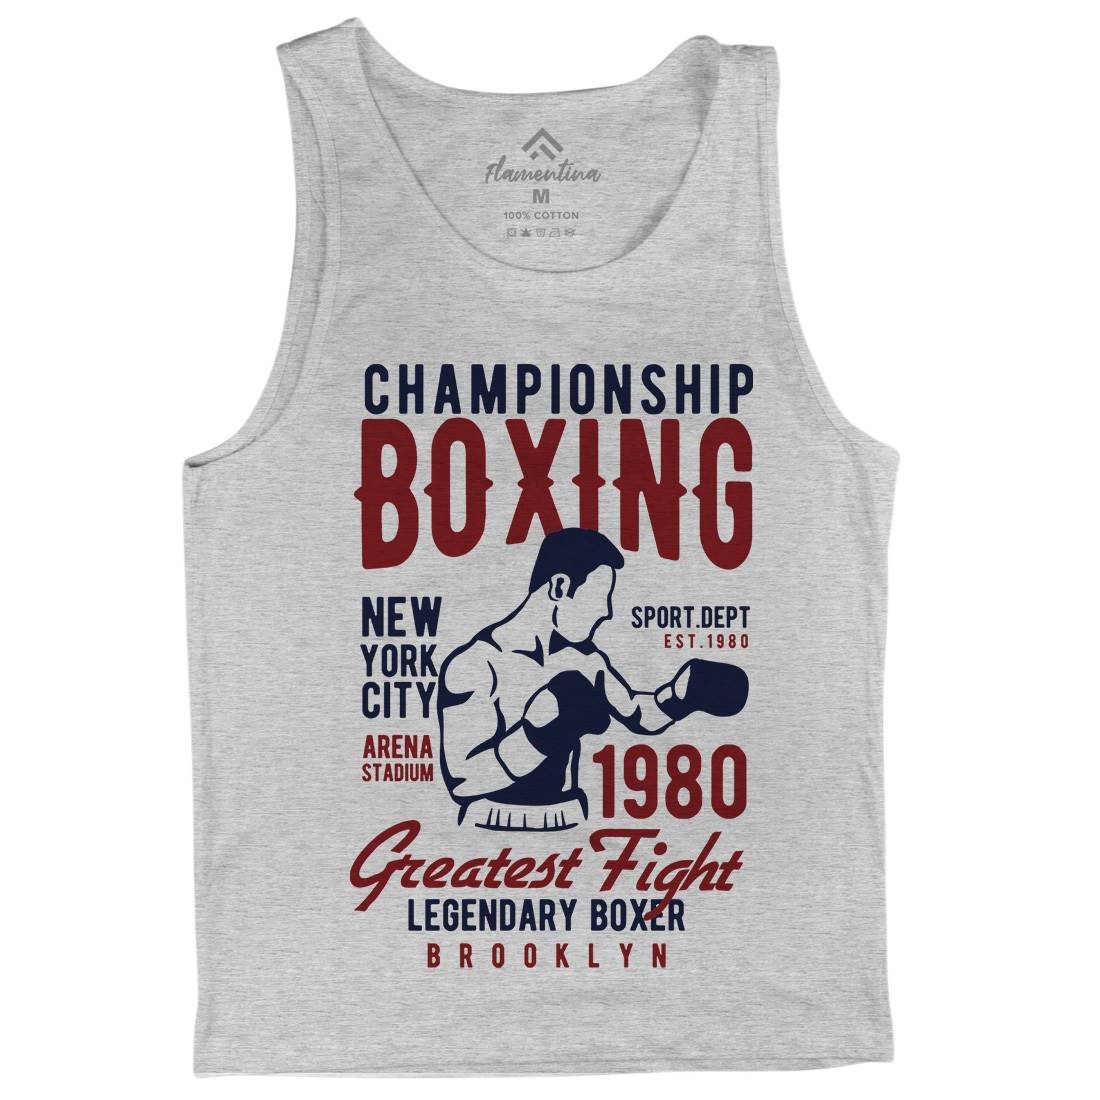 Championship Boxing Mens Tank Top Vest Sport B396